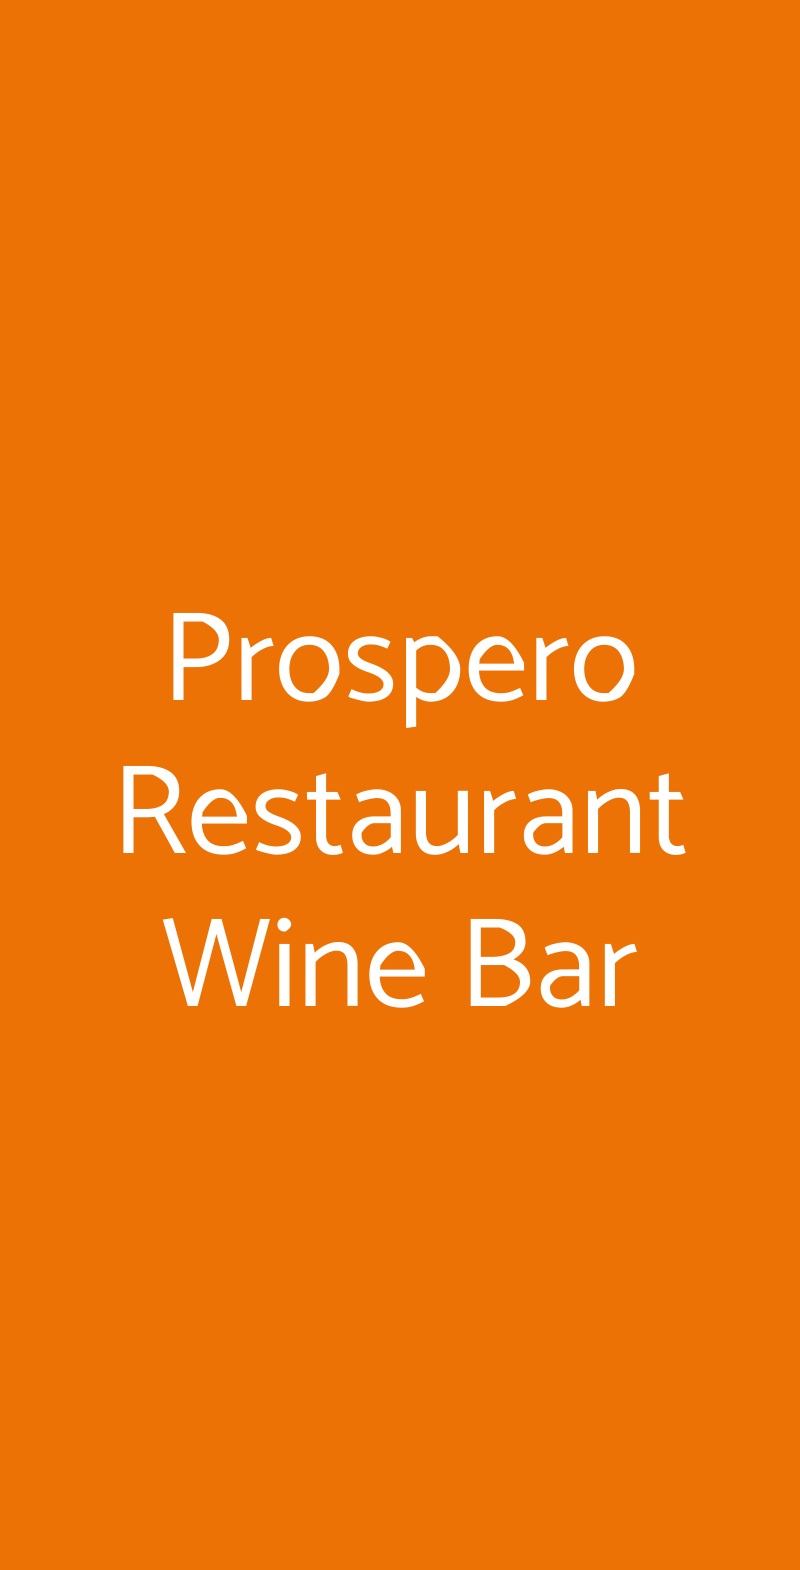 Prospero Restaurant Wine Bar Reggio Emilia menù 1 pagina